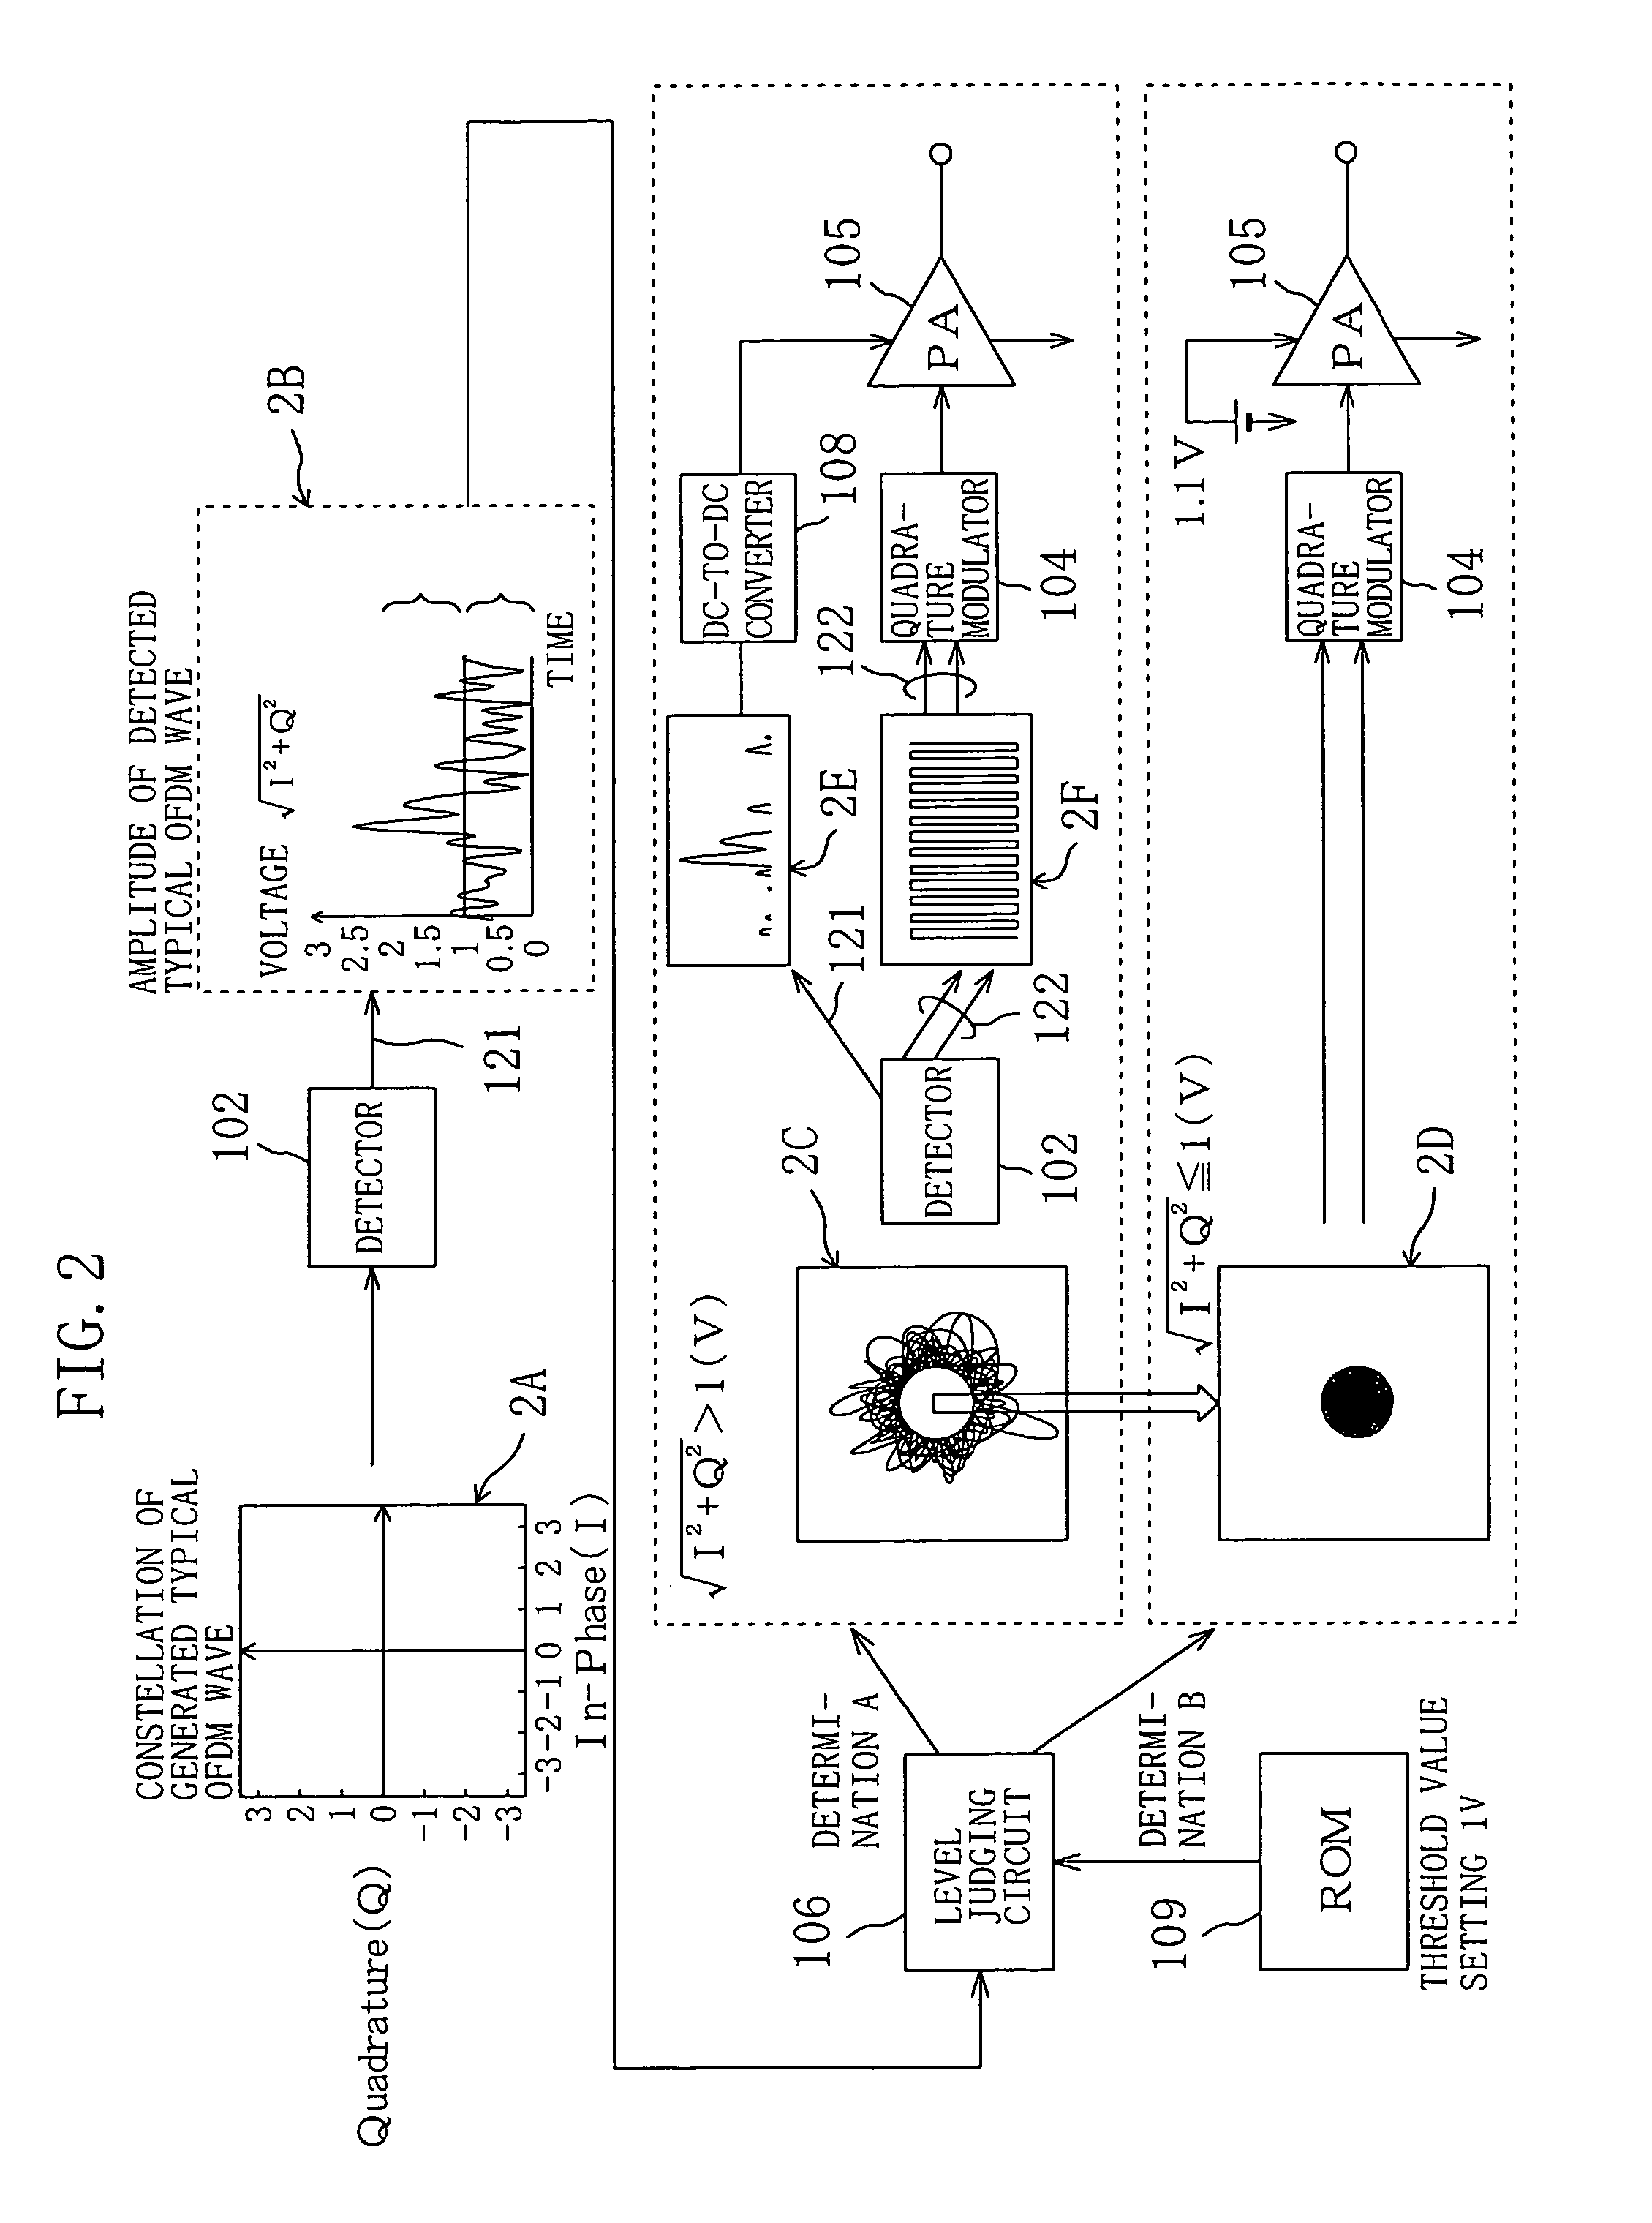 Transmission circuit